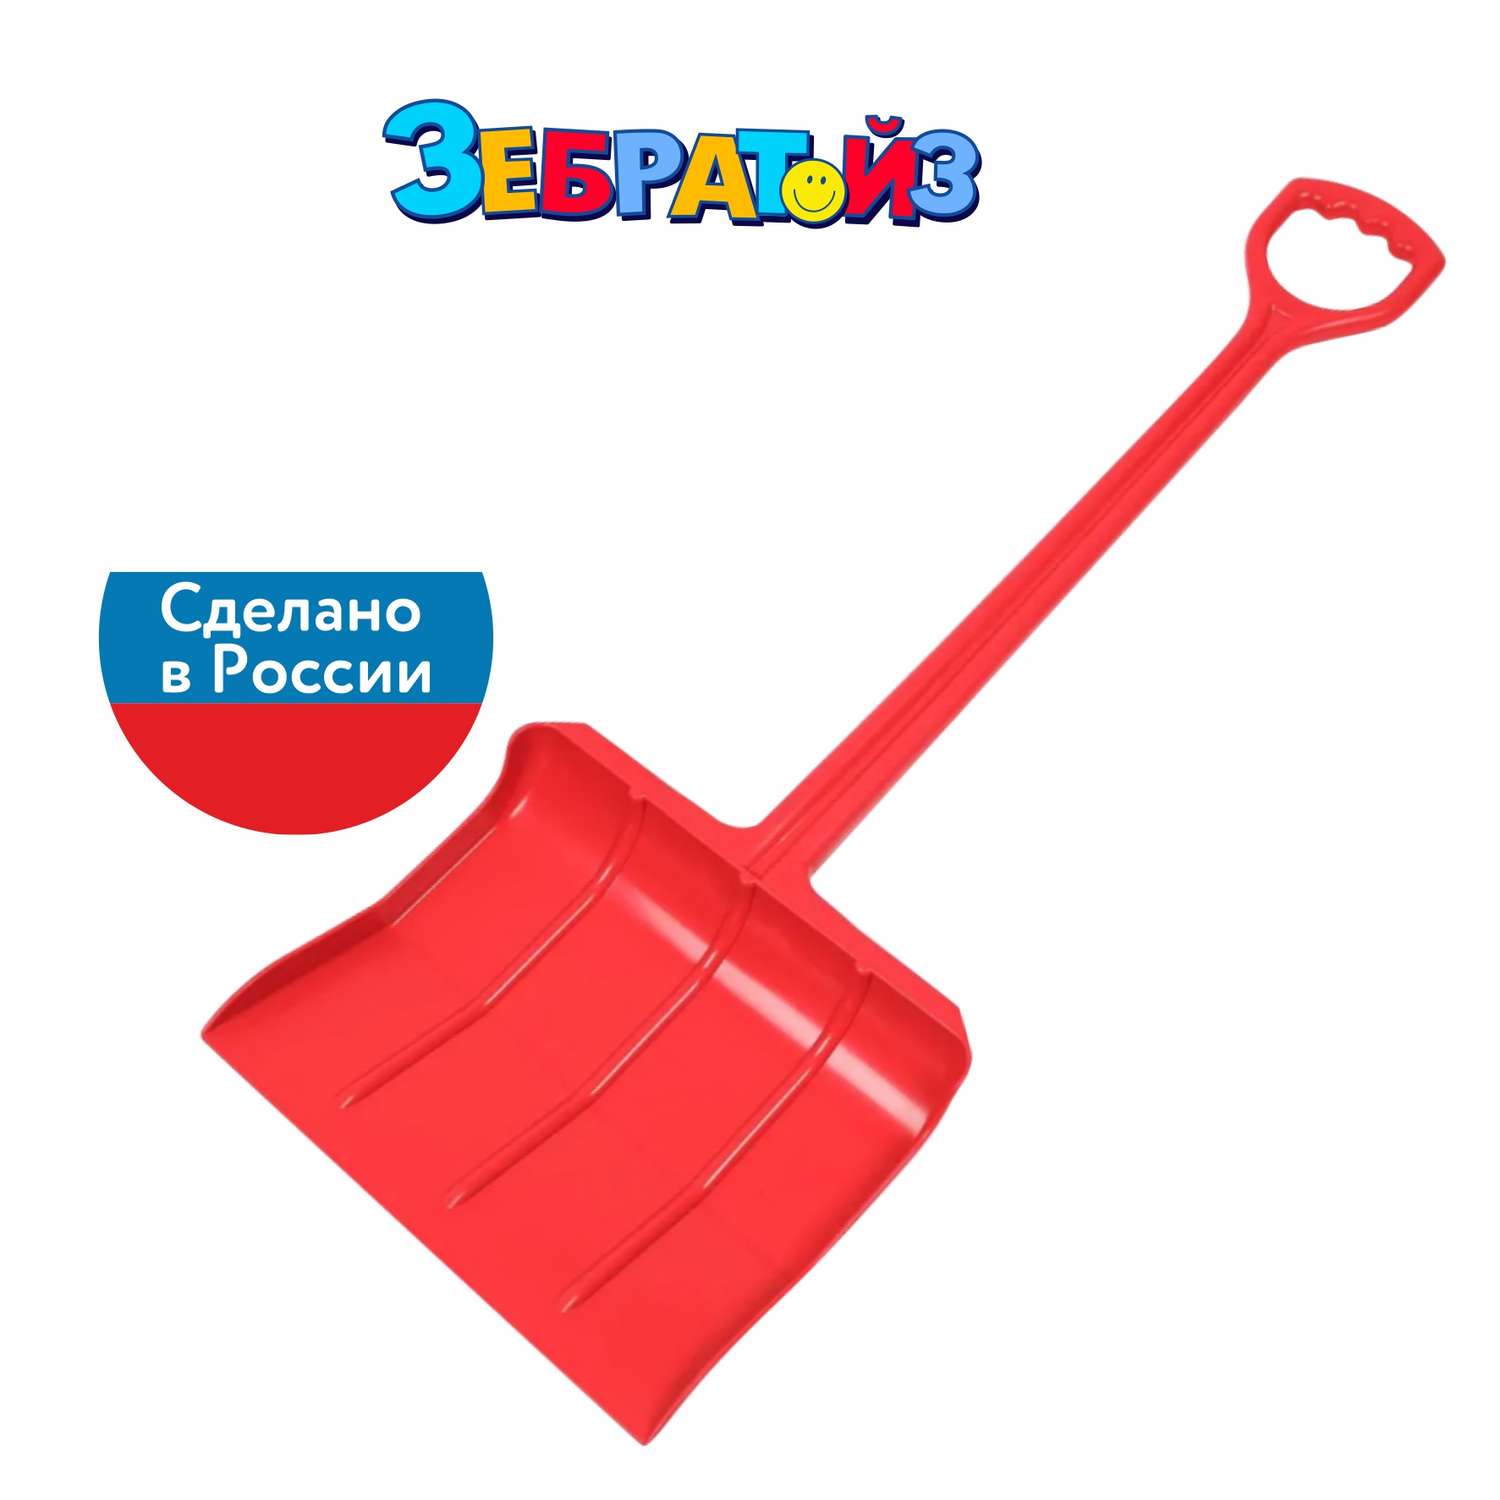 Лопата для снега Zebratoys Красная 15-10195DM-К - фото 1